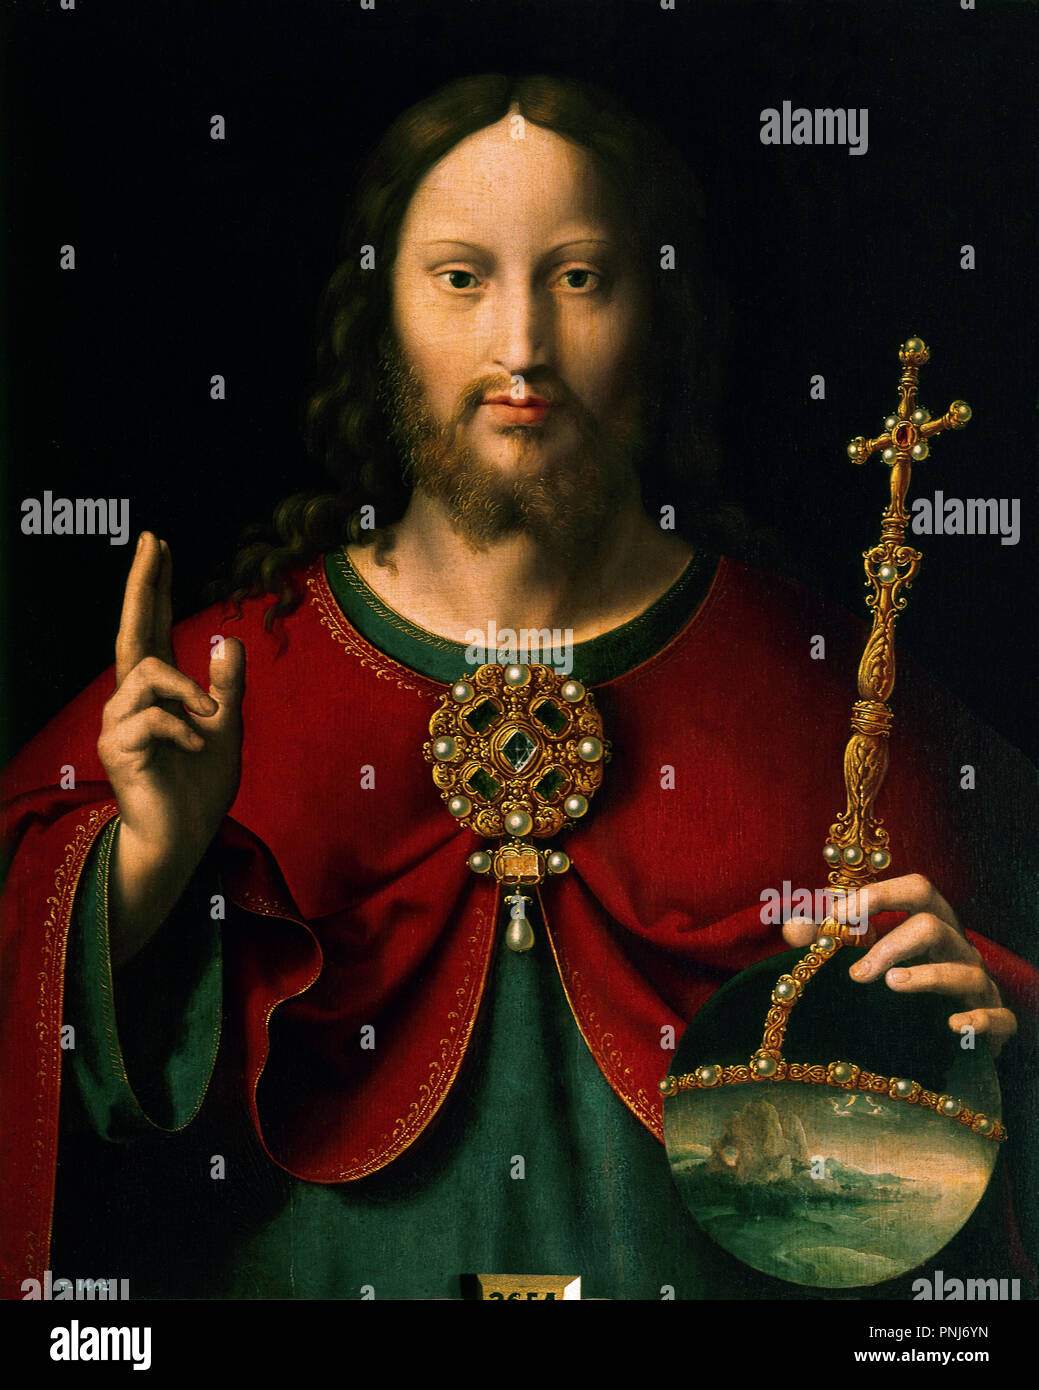 'The Saviour', ca. 1520, Oil on Panel, 60 cm x 47 cm, P02654. Author: CLEVE, JOOS VAN. Location: MUSEO HOSPITAL DE SANTA CRUZ. Toledo. SPAIN. Stock Photo